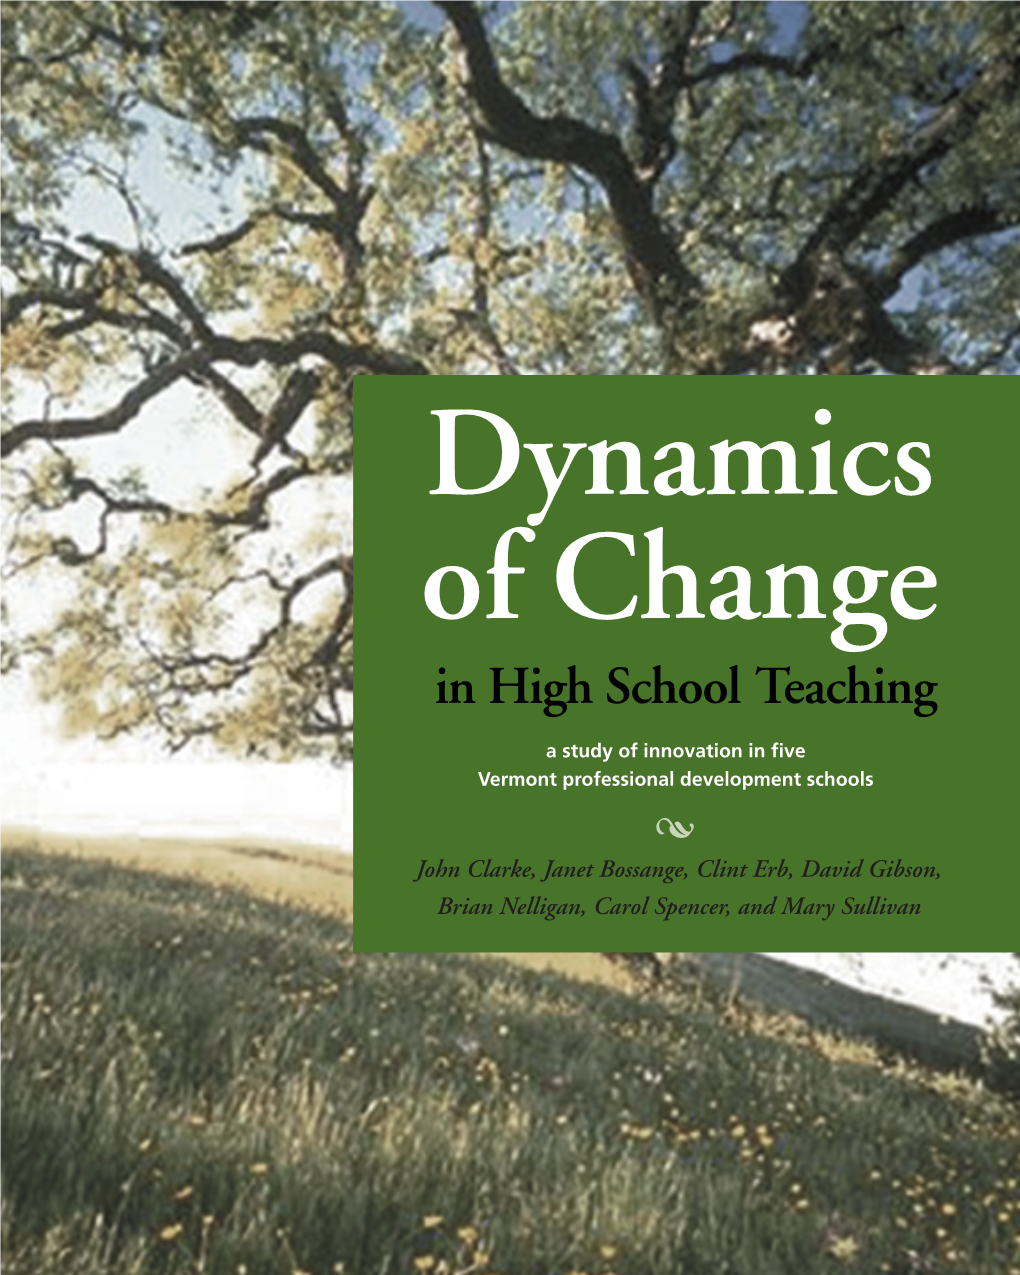 Dynamics of Change in High School Teaching